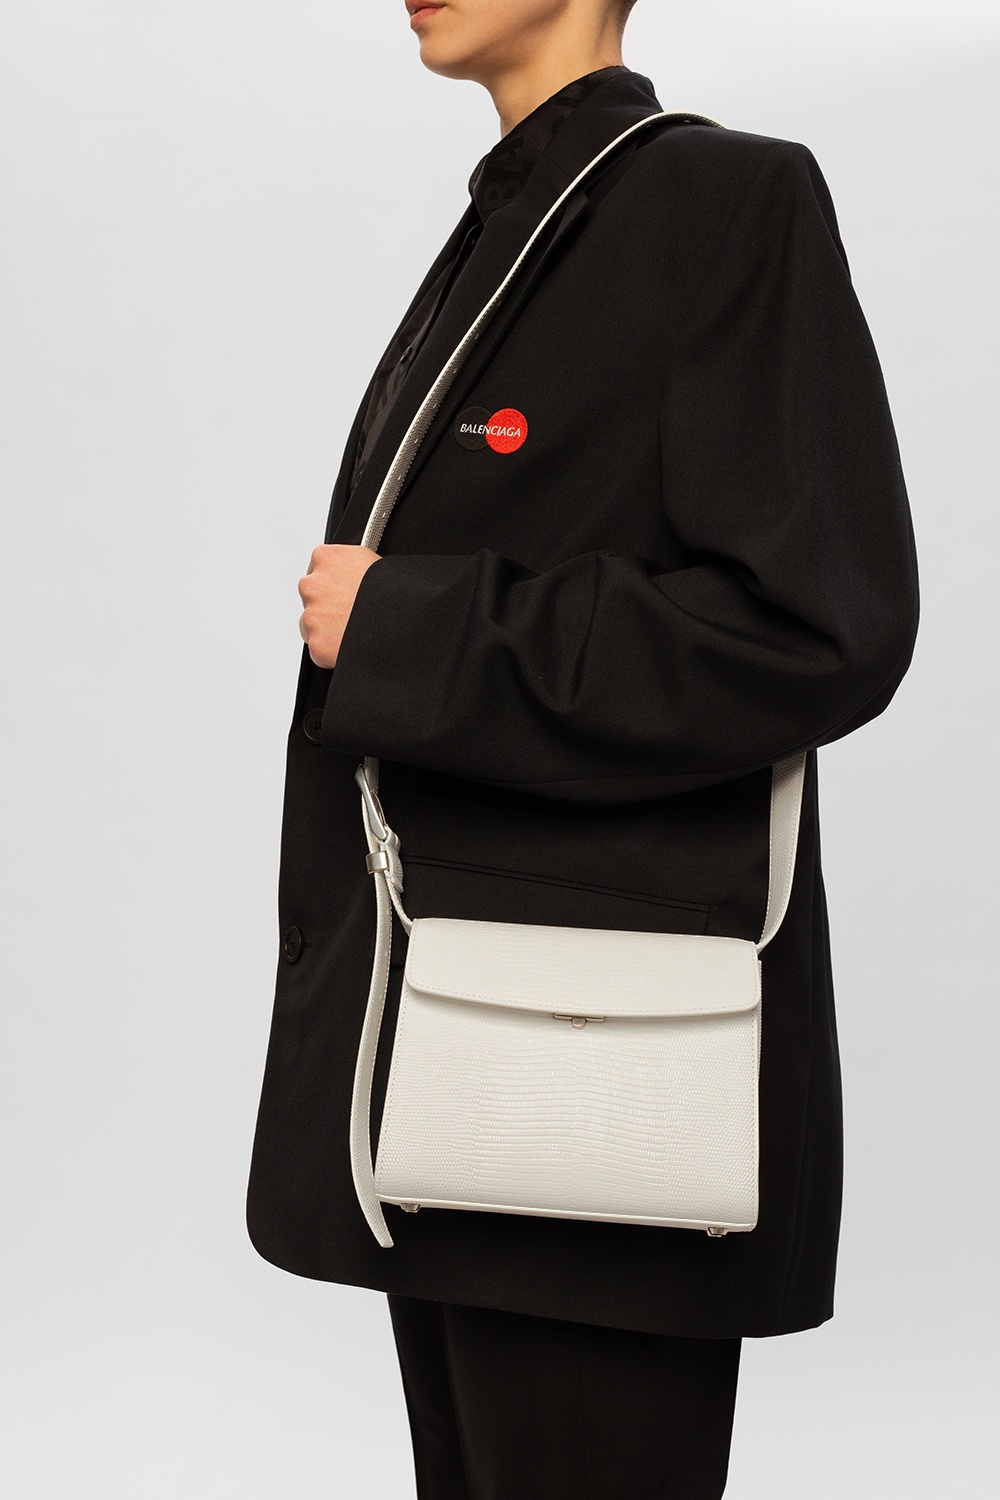 Balenciaga Ghost Medium Printed Croceffect Leather Shoulder Bag In Black   ModeSens